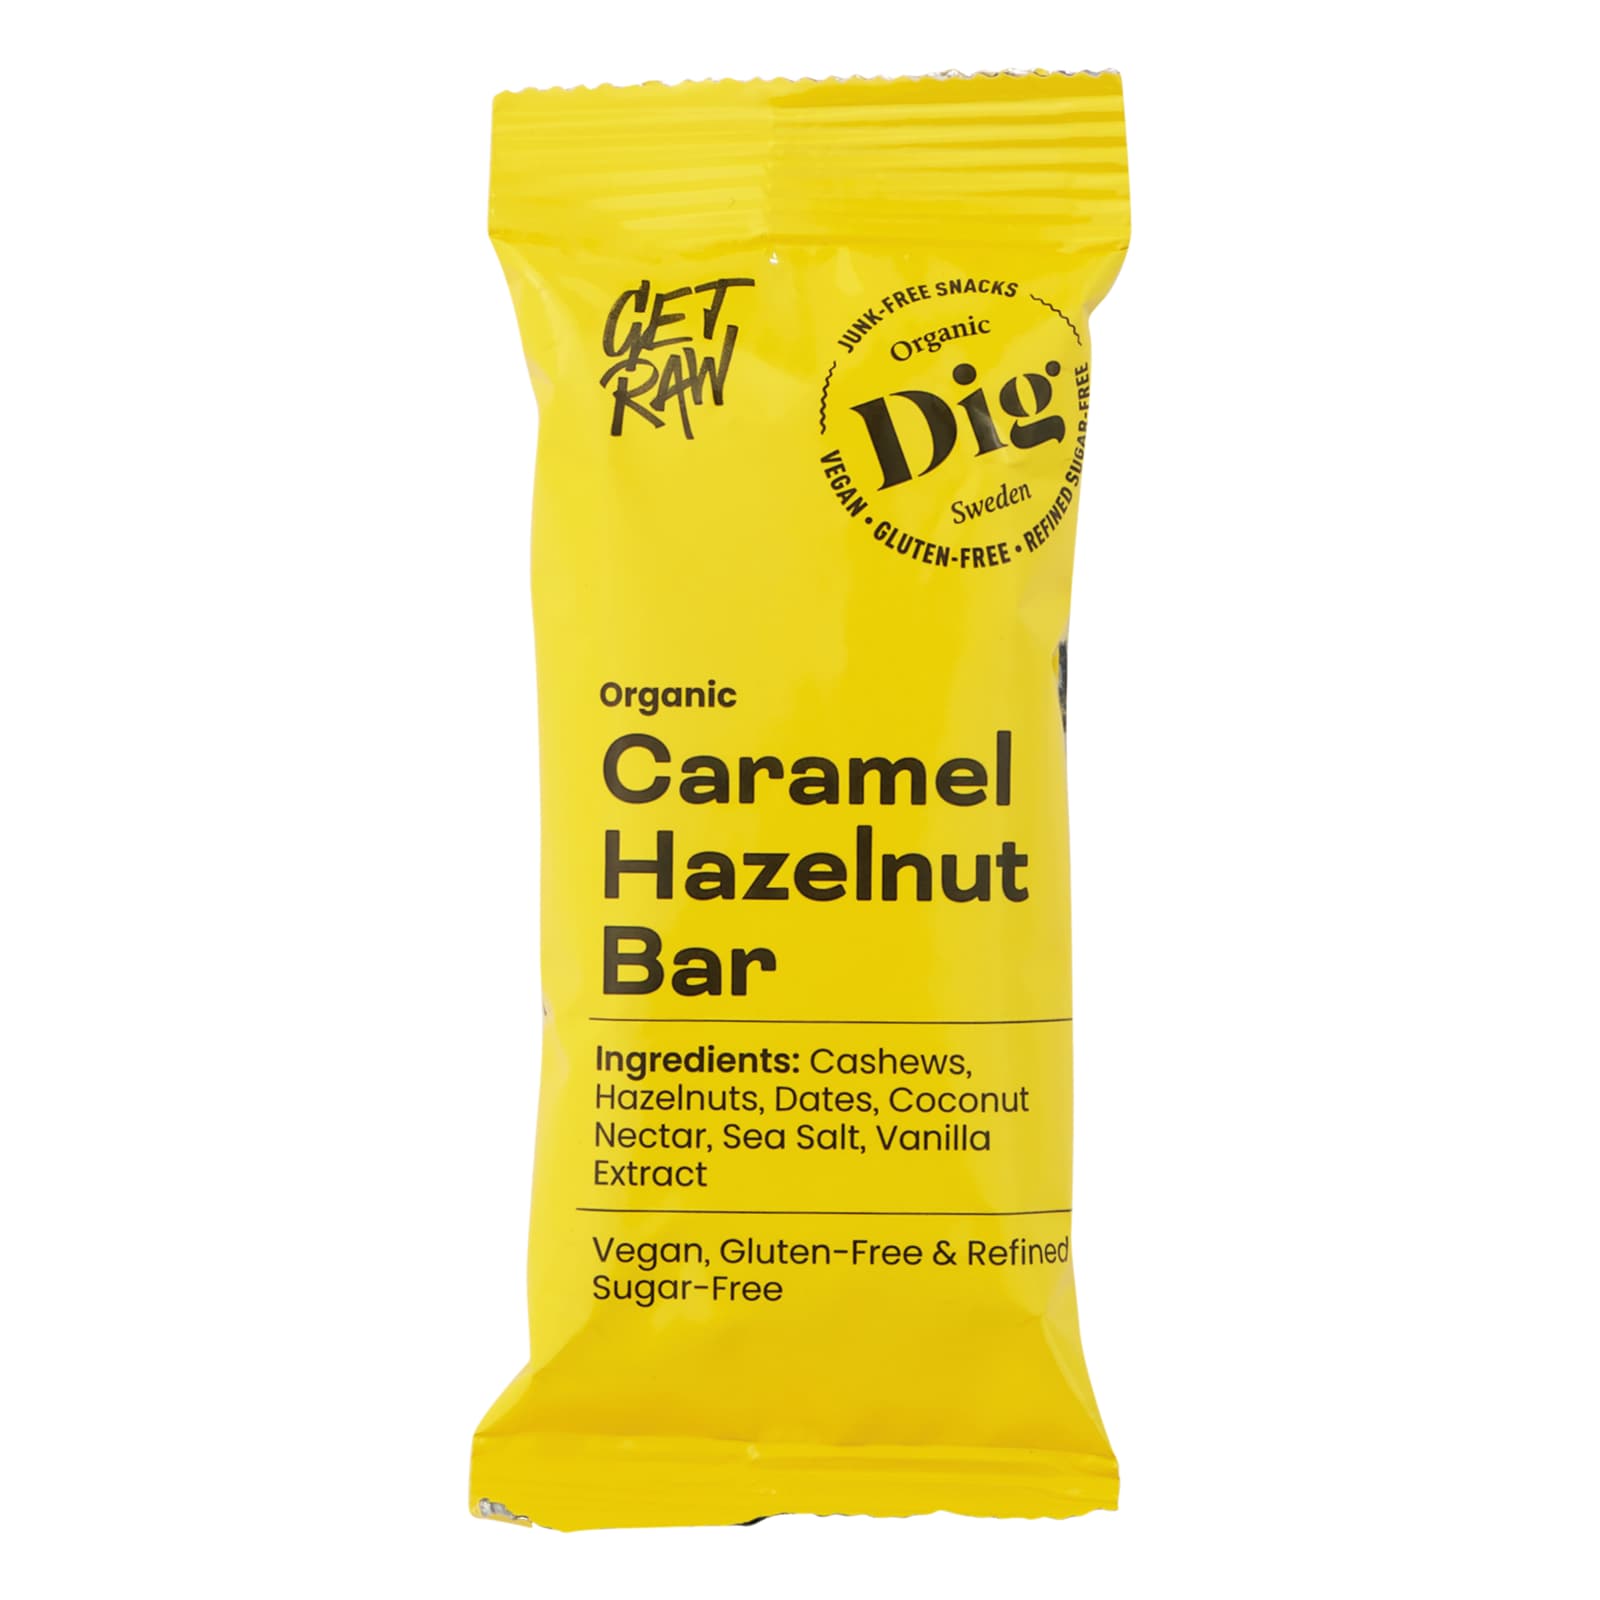 Dig Caramel Hazelnut Bar